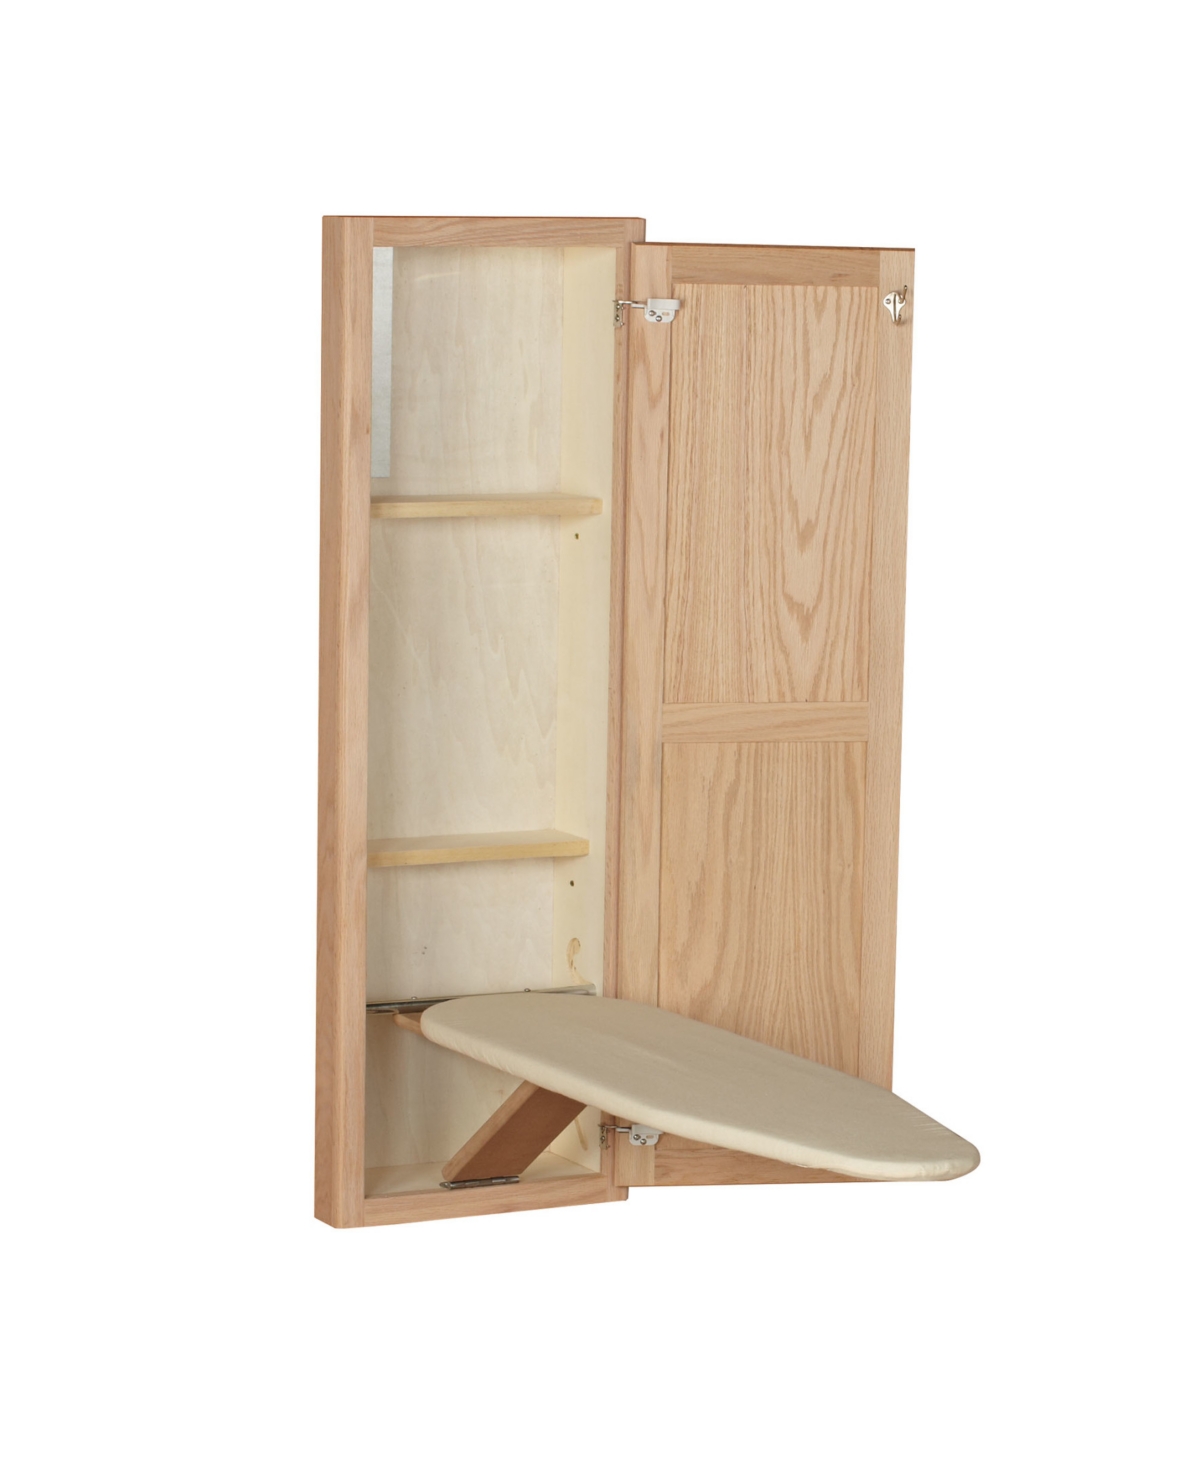 Household Essentials Stowaway Inwall Wood Cabinet, Oak In Natural